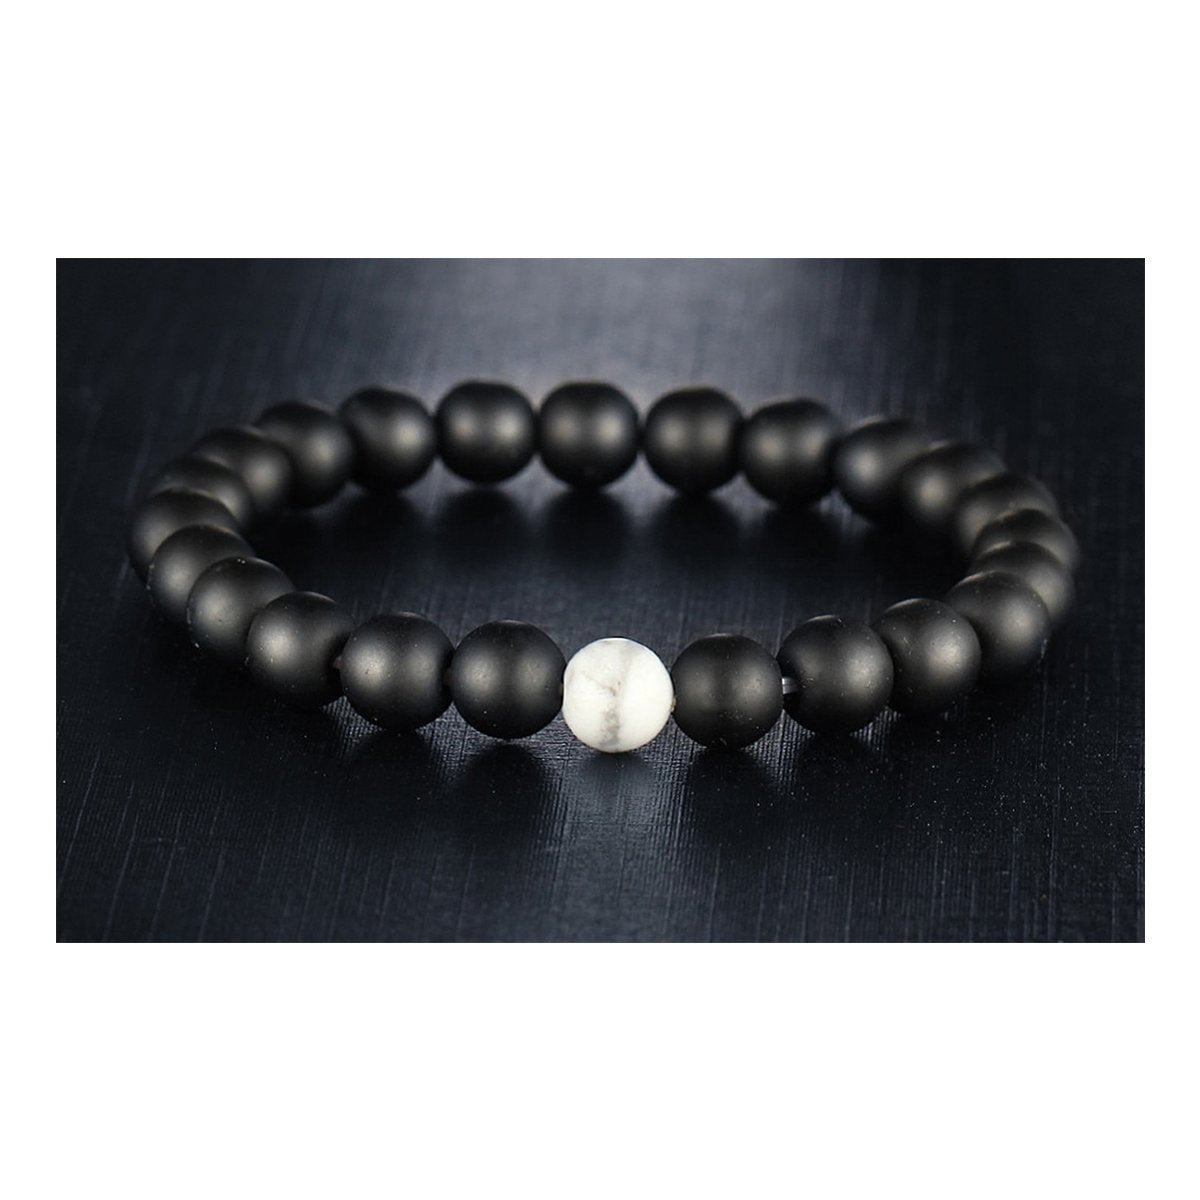 Onyx Lava Reiki Meditation Yoga Healing Beads Distance Bracelet